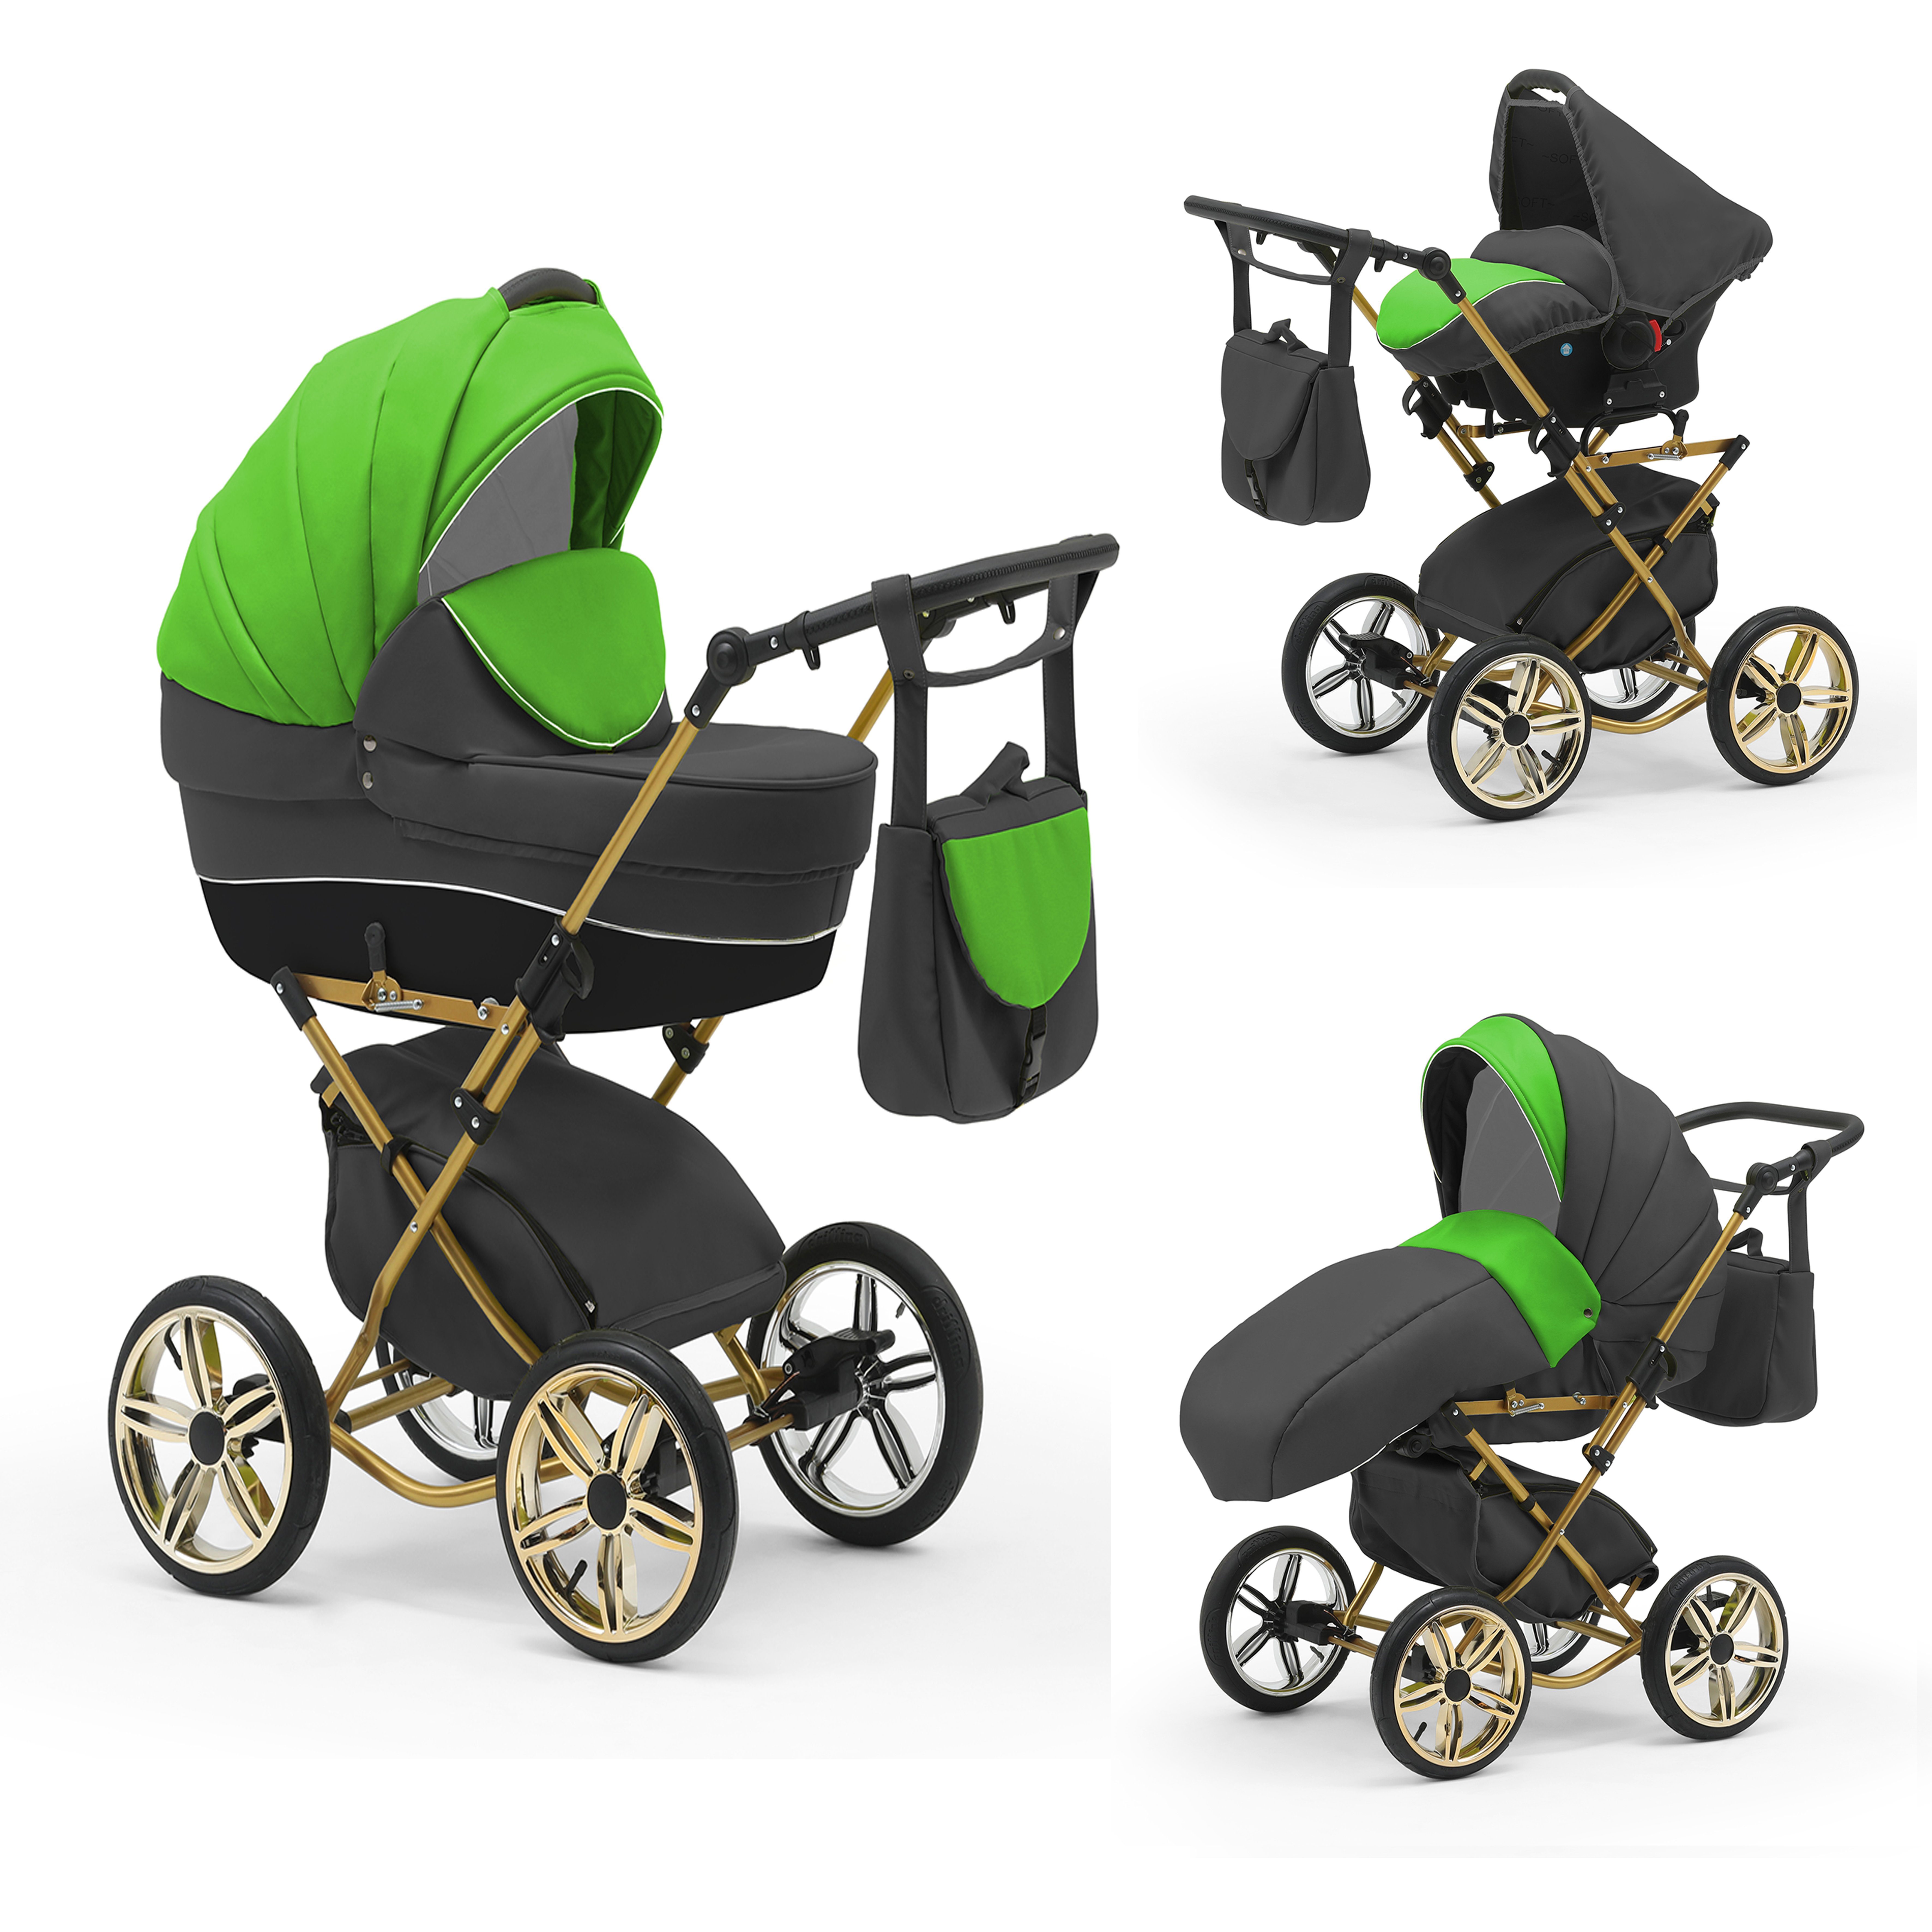 babies-on-wheels Kombi-Kinderwagen Sorento 3 in 1 inkl. Autositz - 13 Teile - in 10 Designs Grün-Grau | Kombikinderwagen